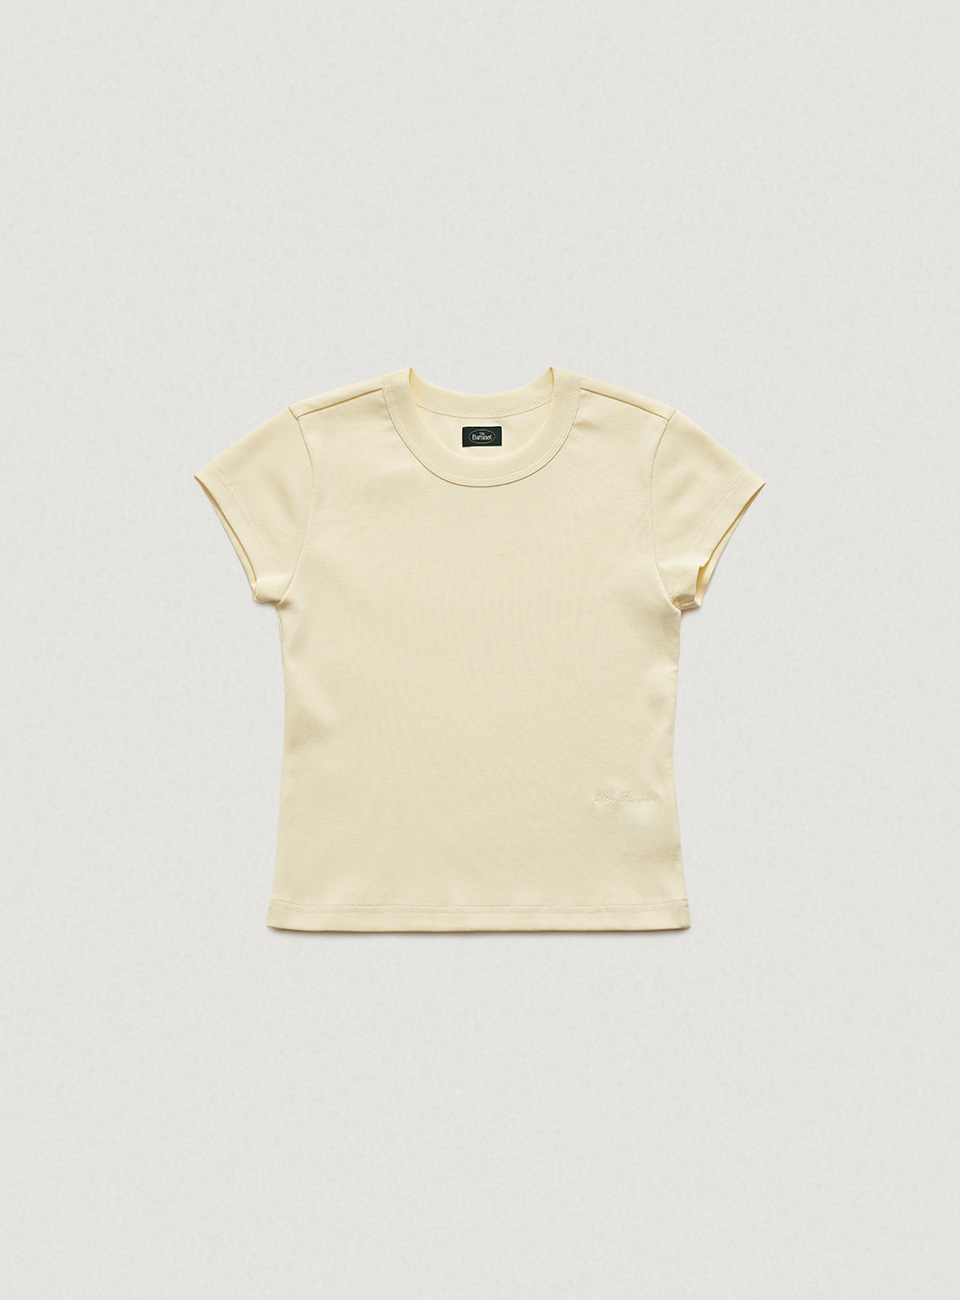 Yellow Fudge Cropped T-Shirt [6월 초 순차 배송]